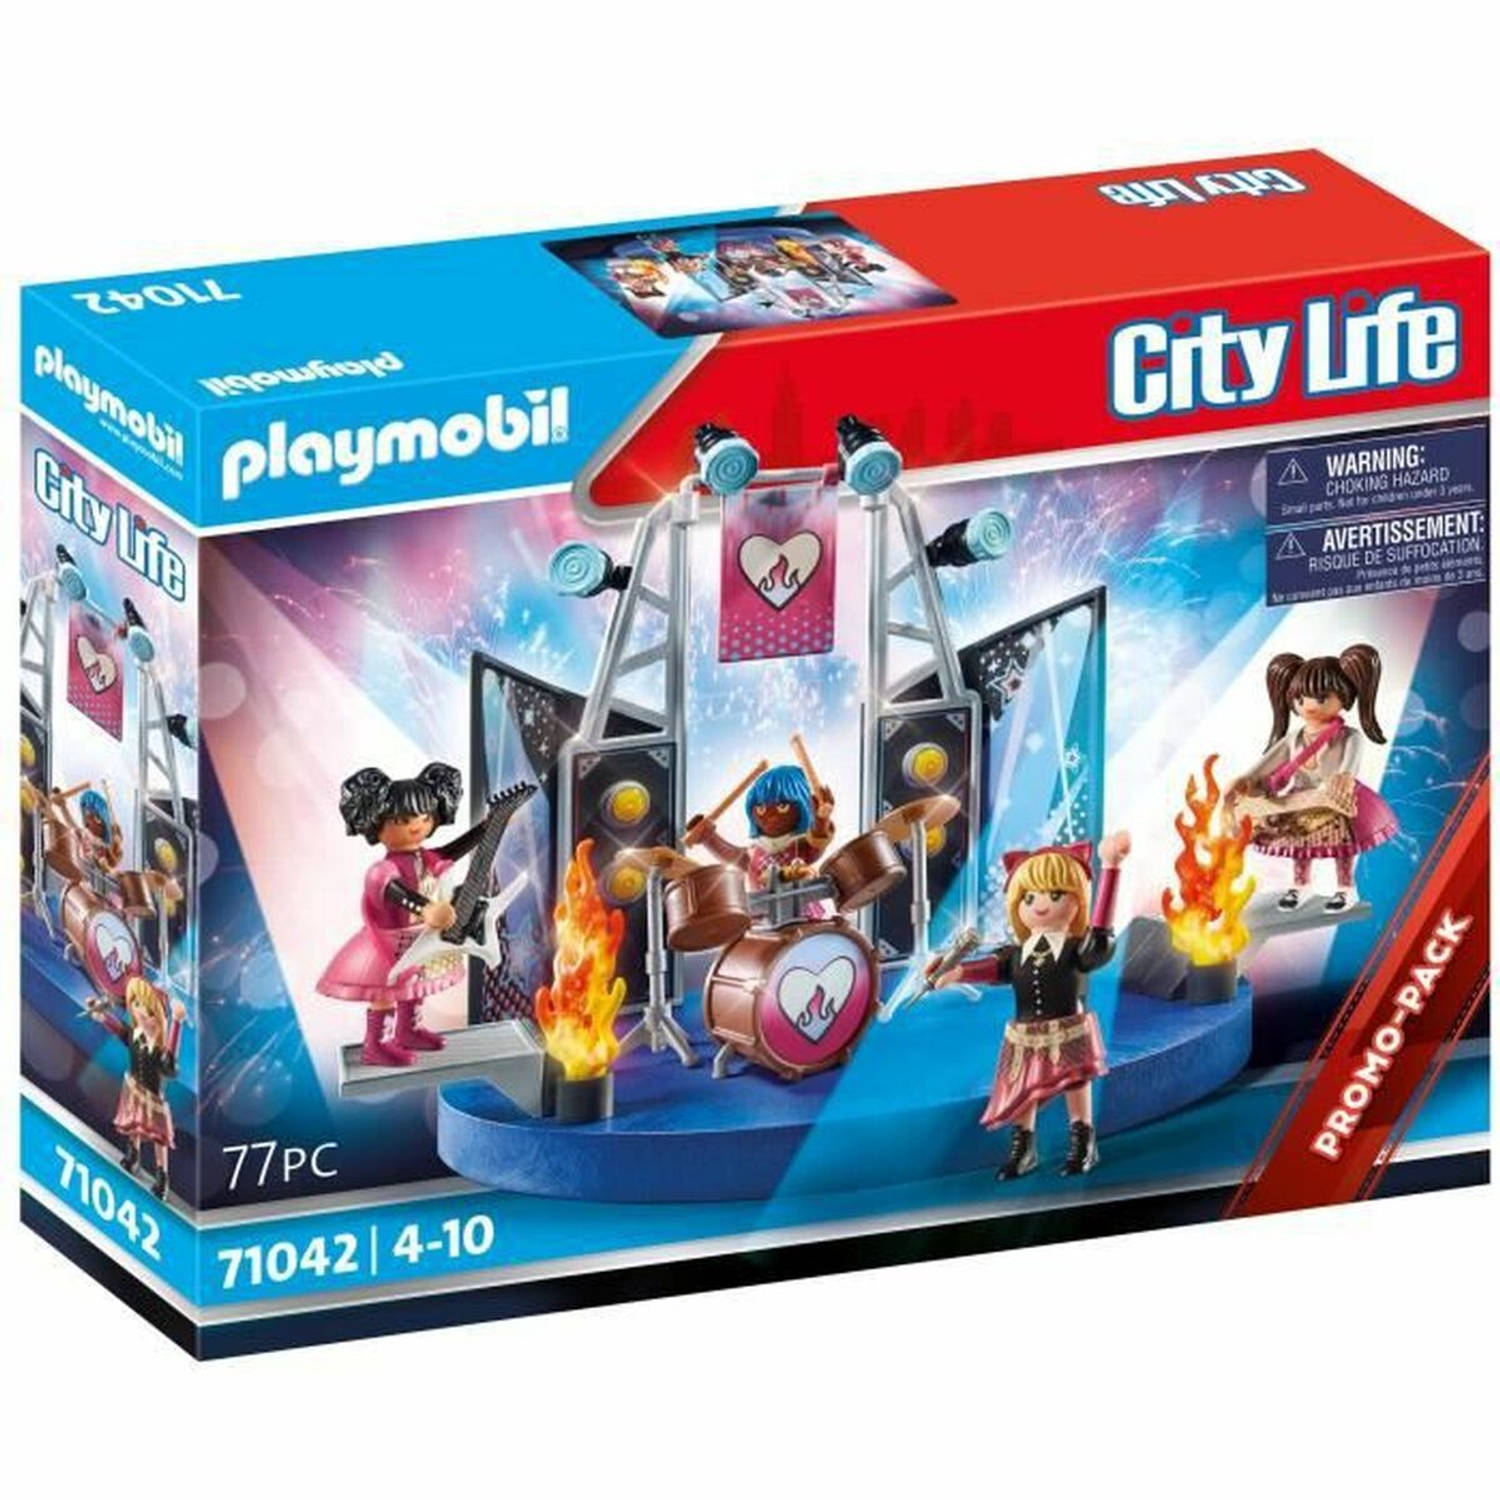 Playmobil® Constructie-speelset Music Band (71042), City Life (77 stuks)